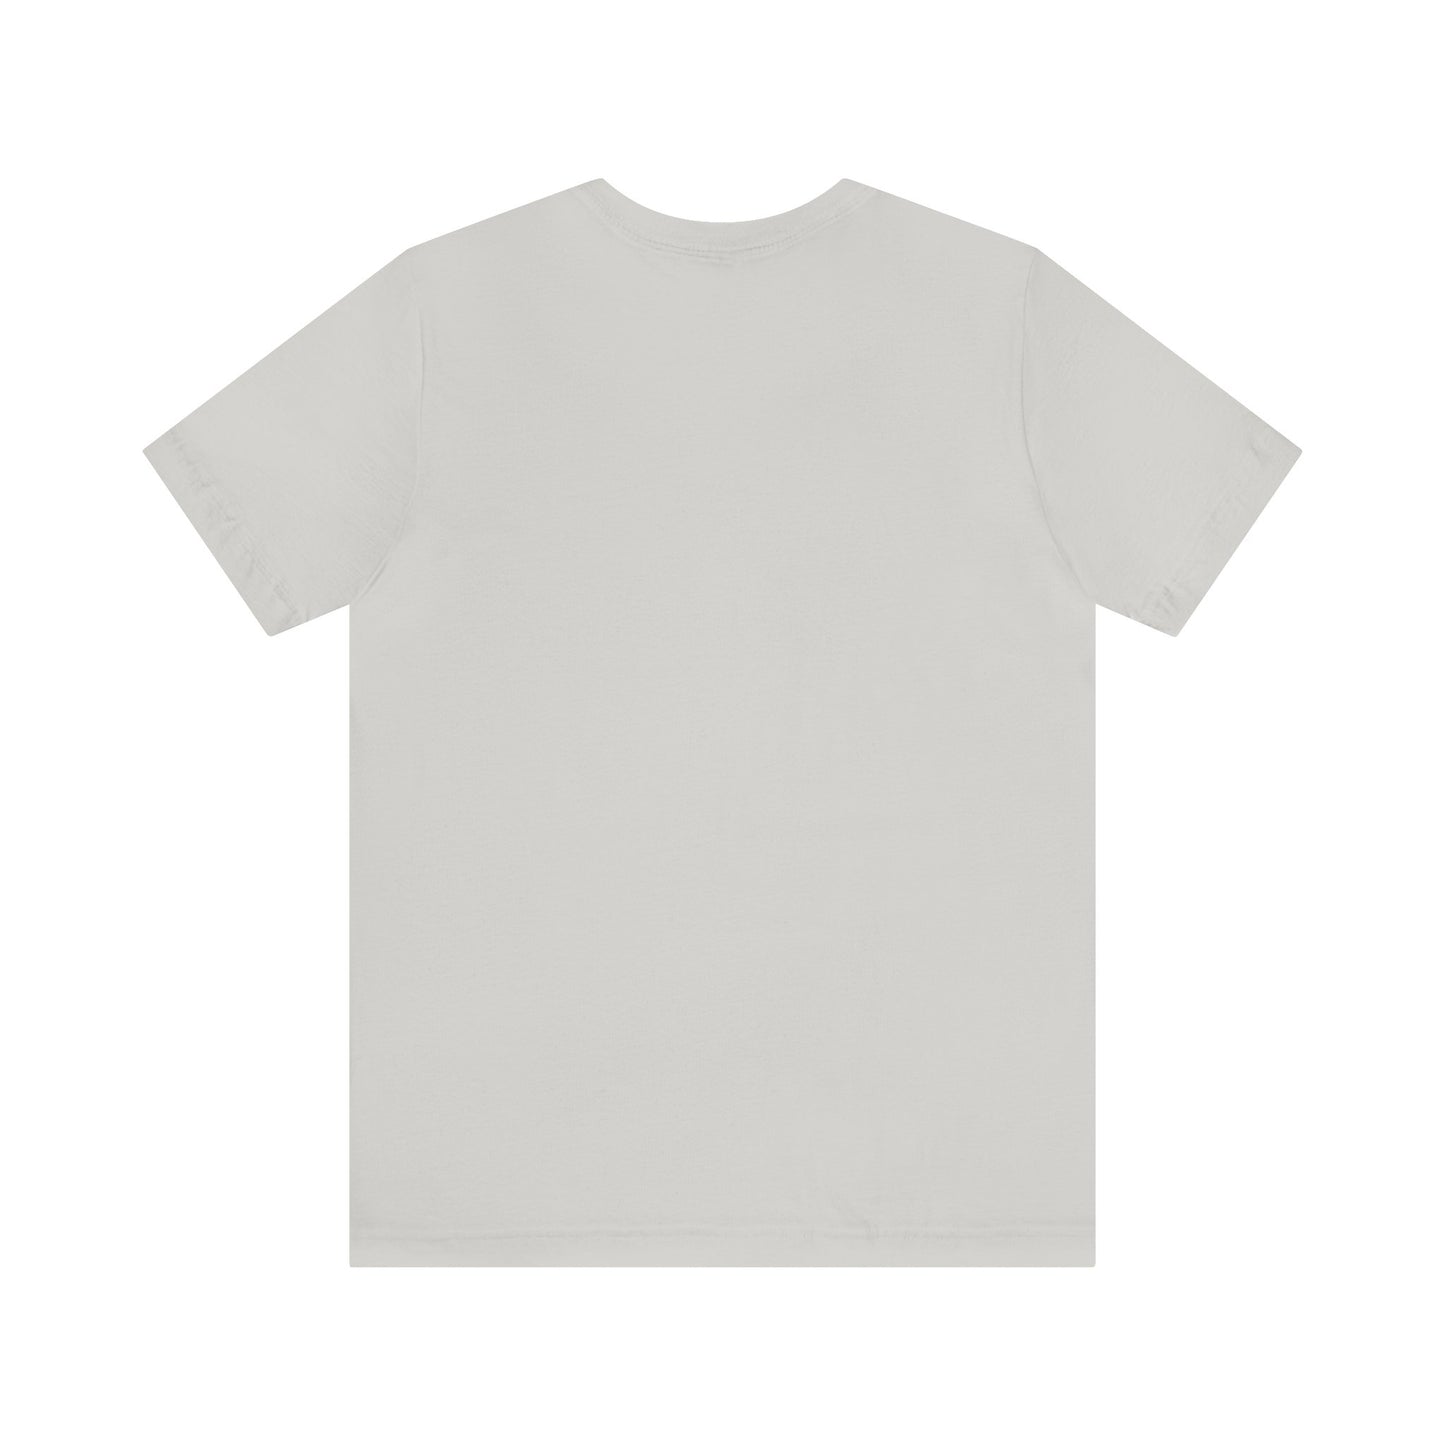 Lana Del Rey Vintage Artwork Unisex Jersey Short Sleeve Tee Shirt